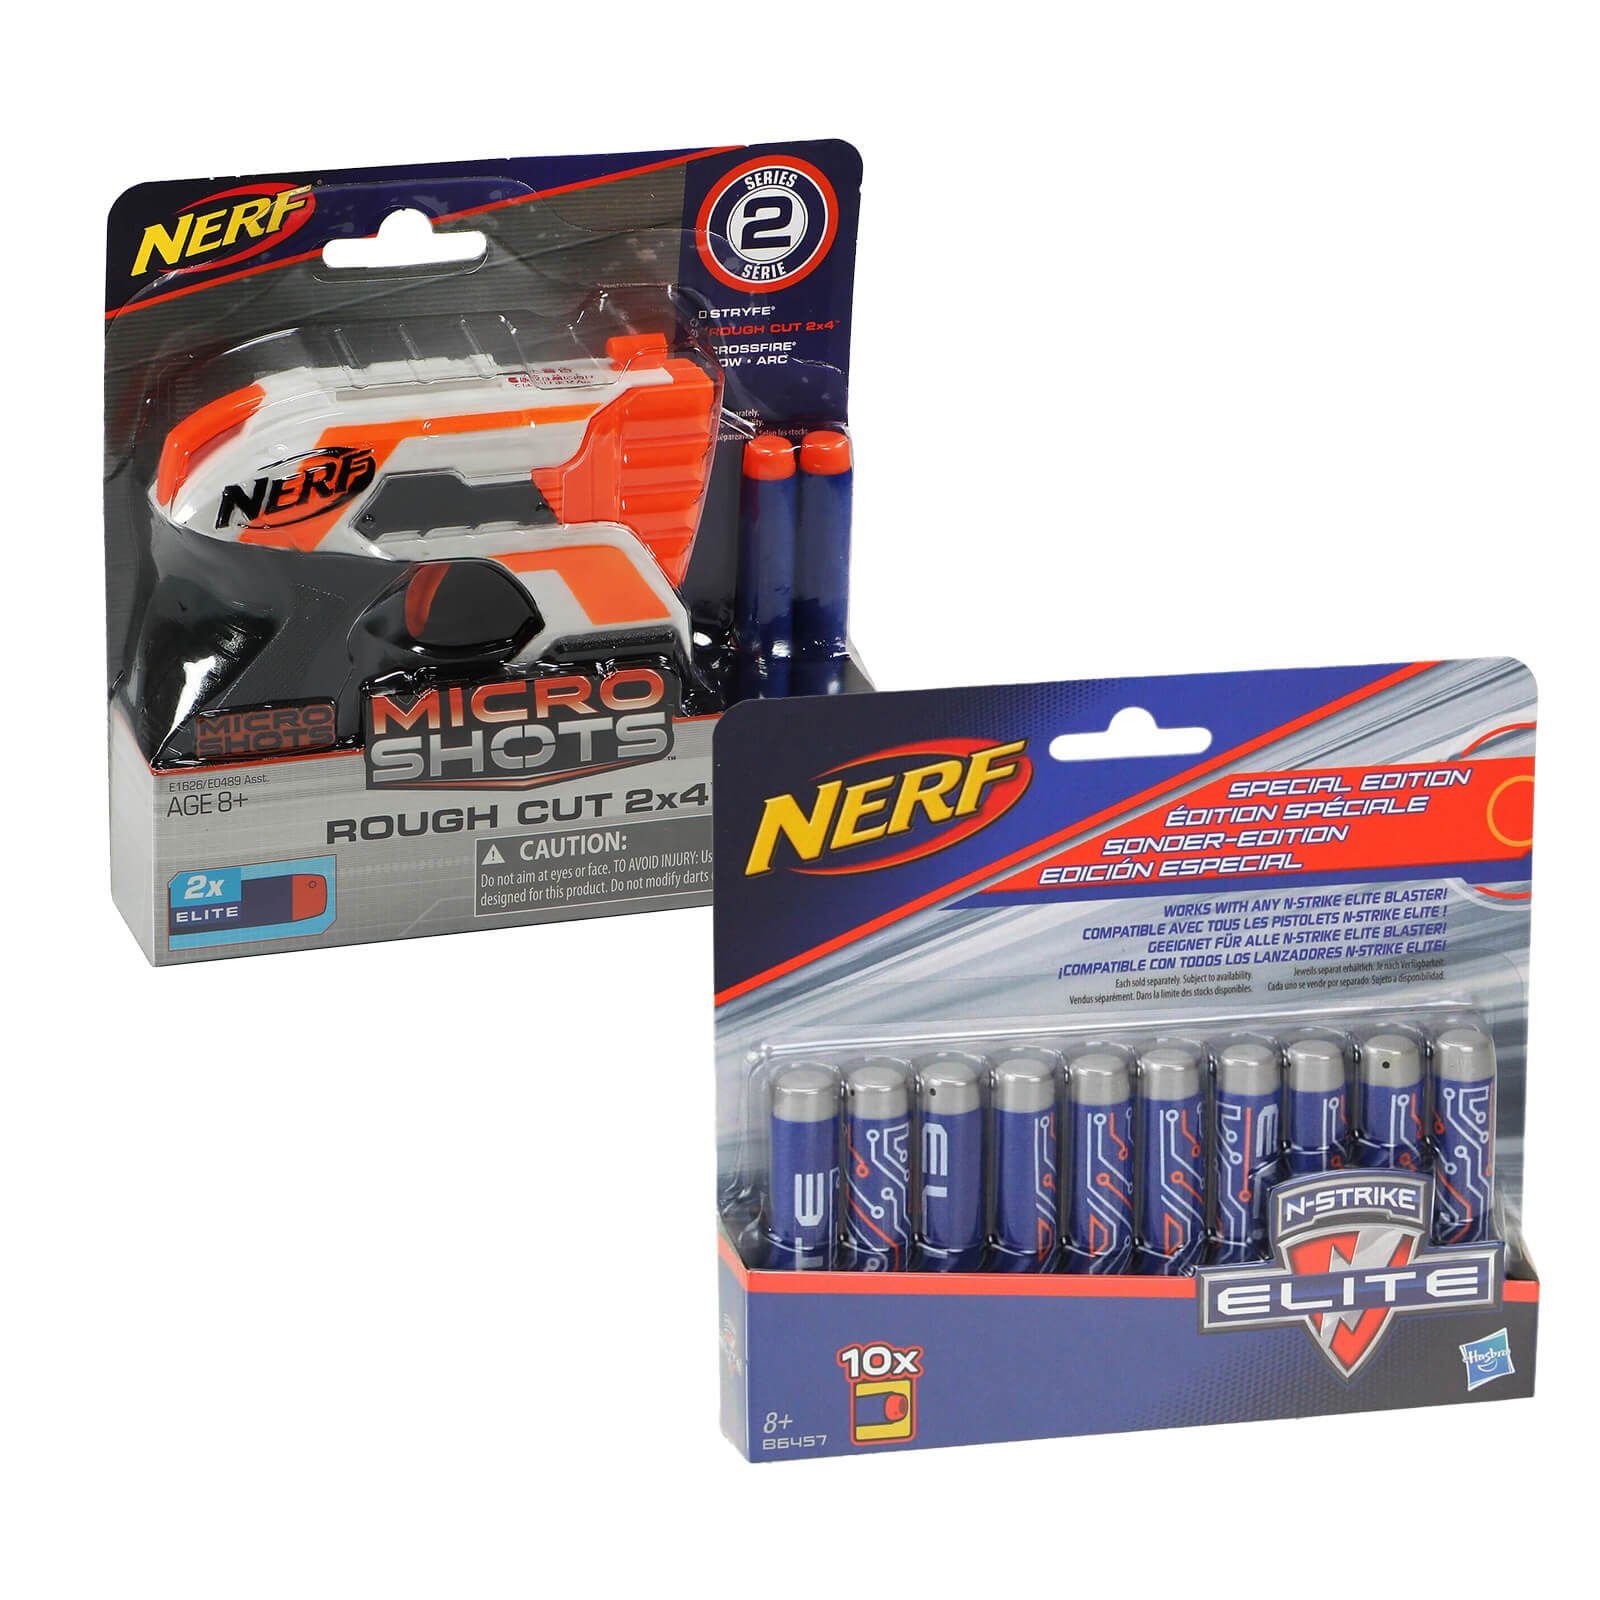 Nerf Blaster Nerf N-Strike Micro Shots Rough Cut 2x4 Blaster + Darts Sonderedition